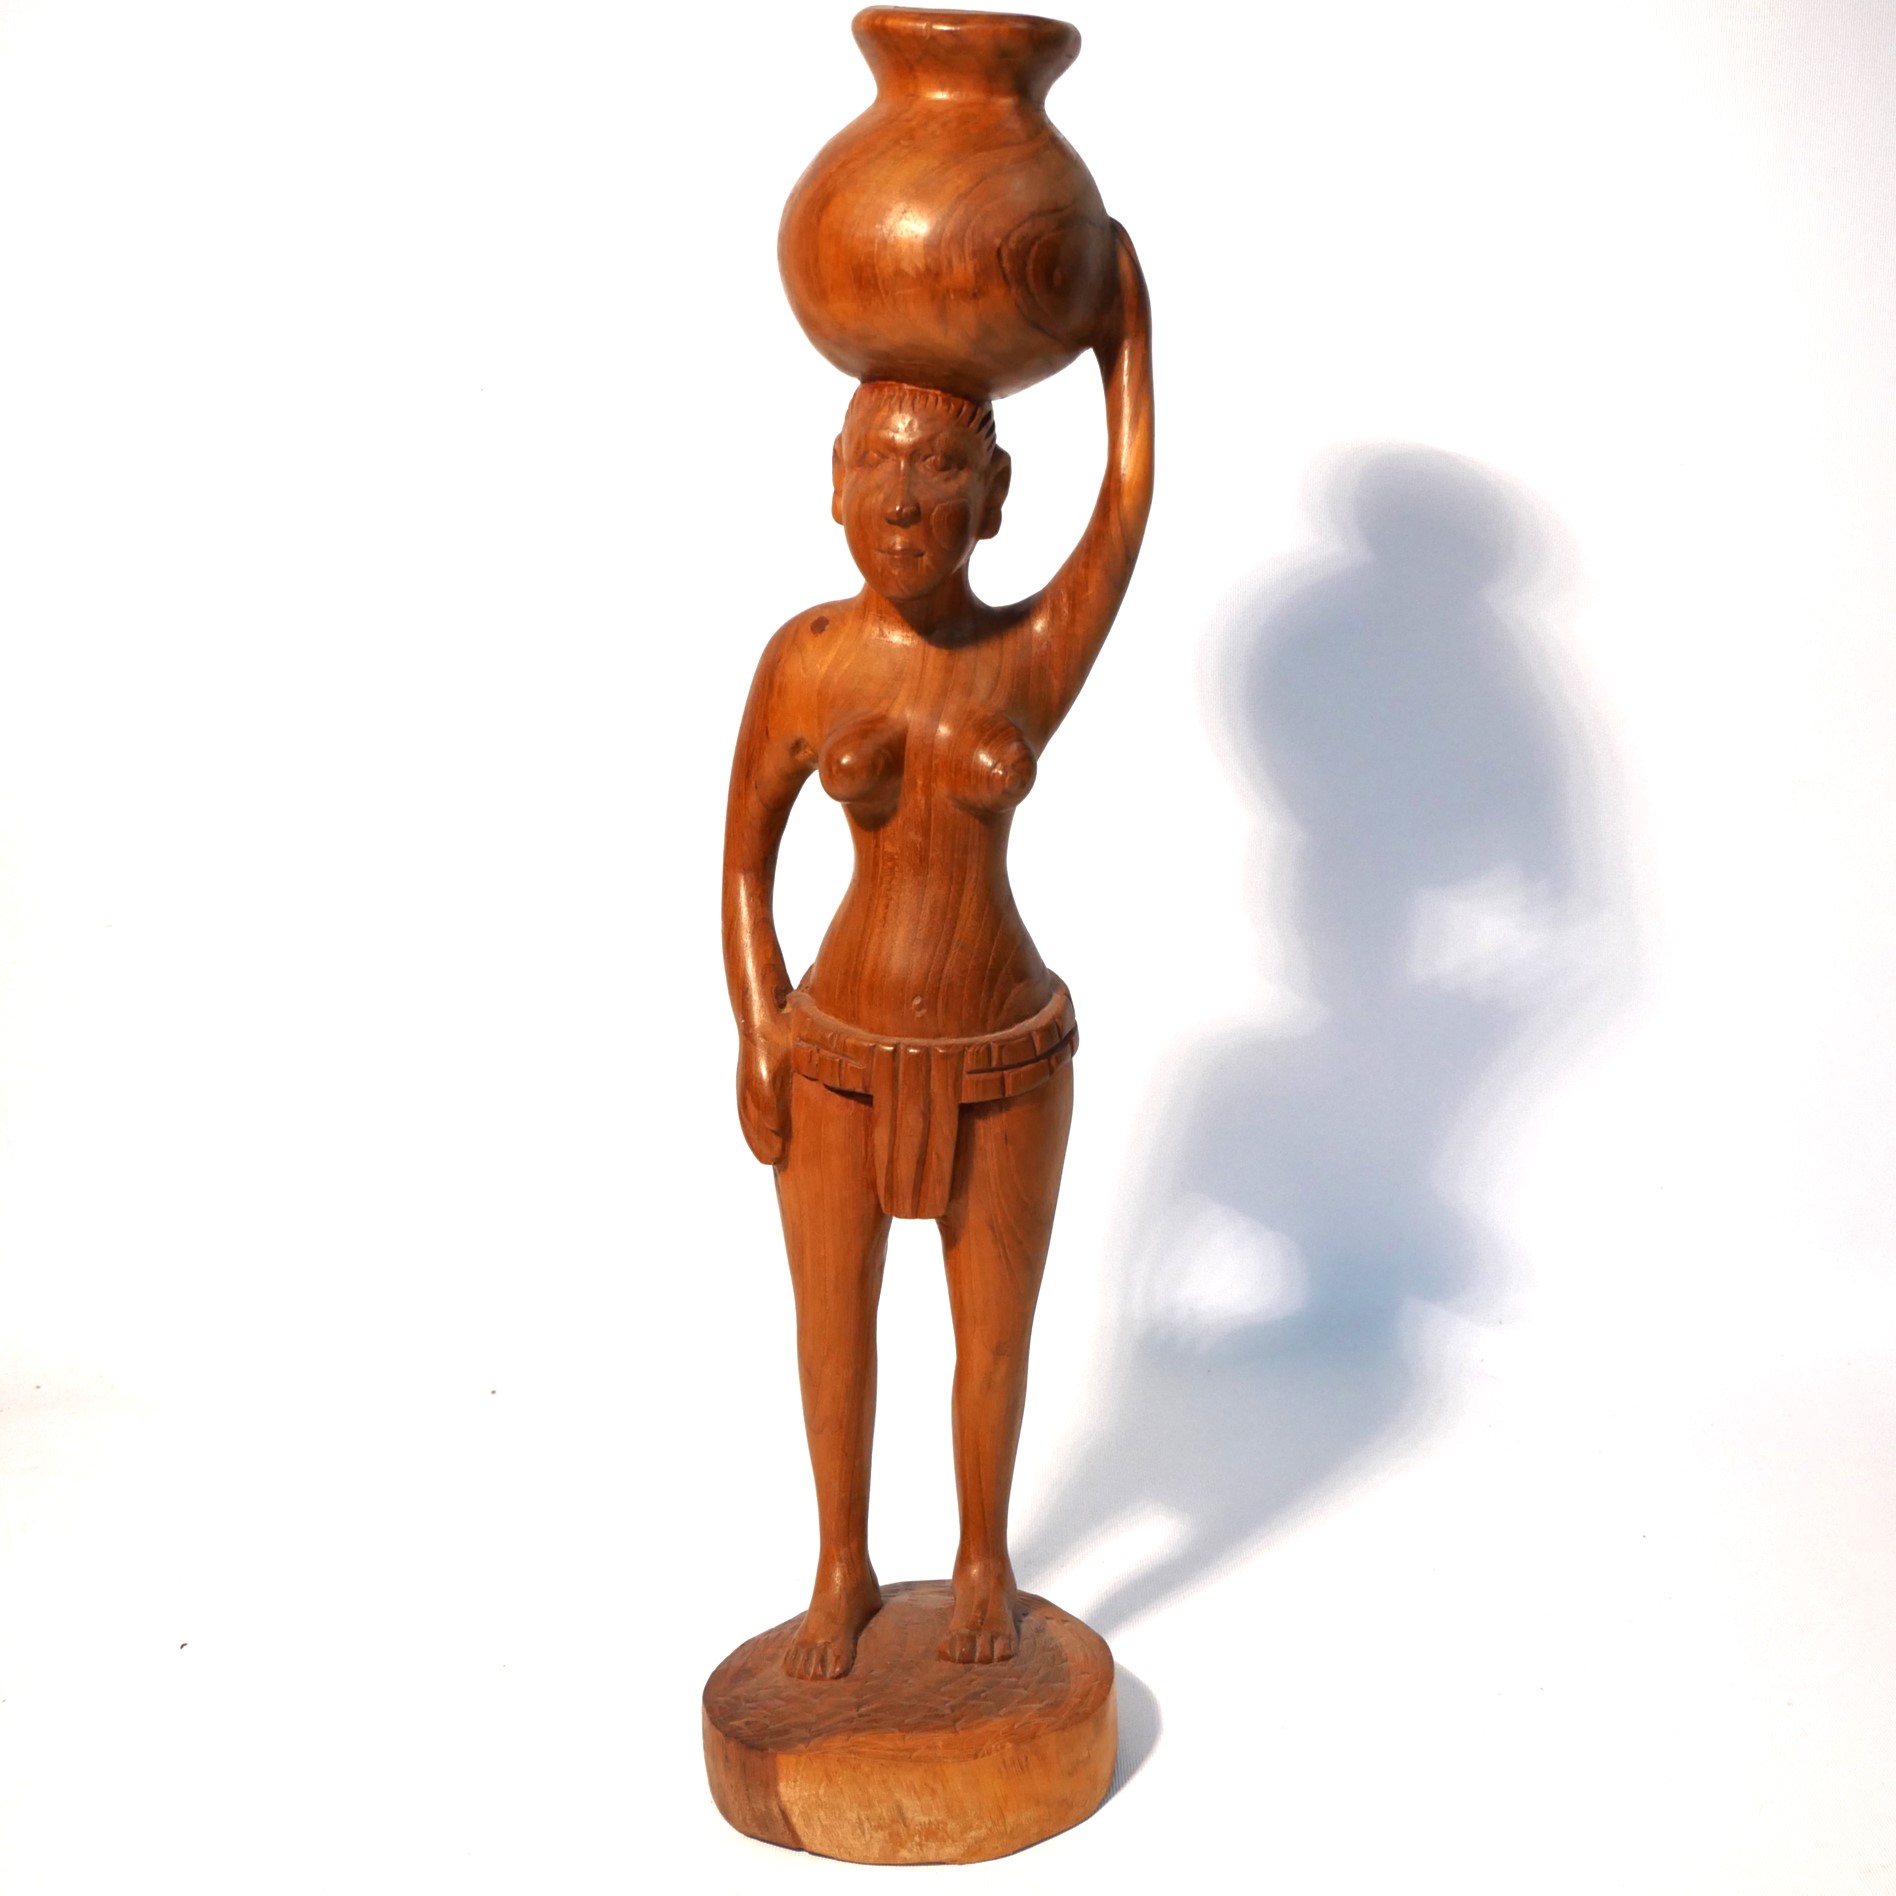 statuette en bois africaine